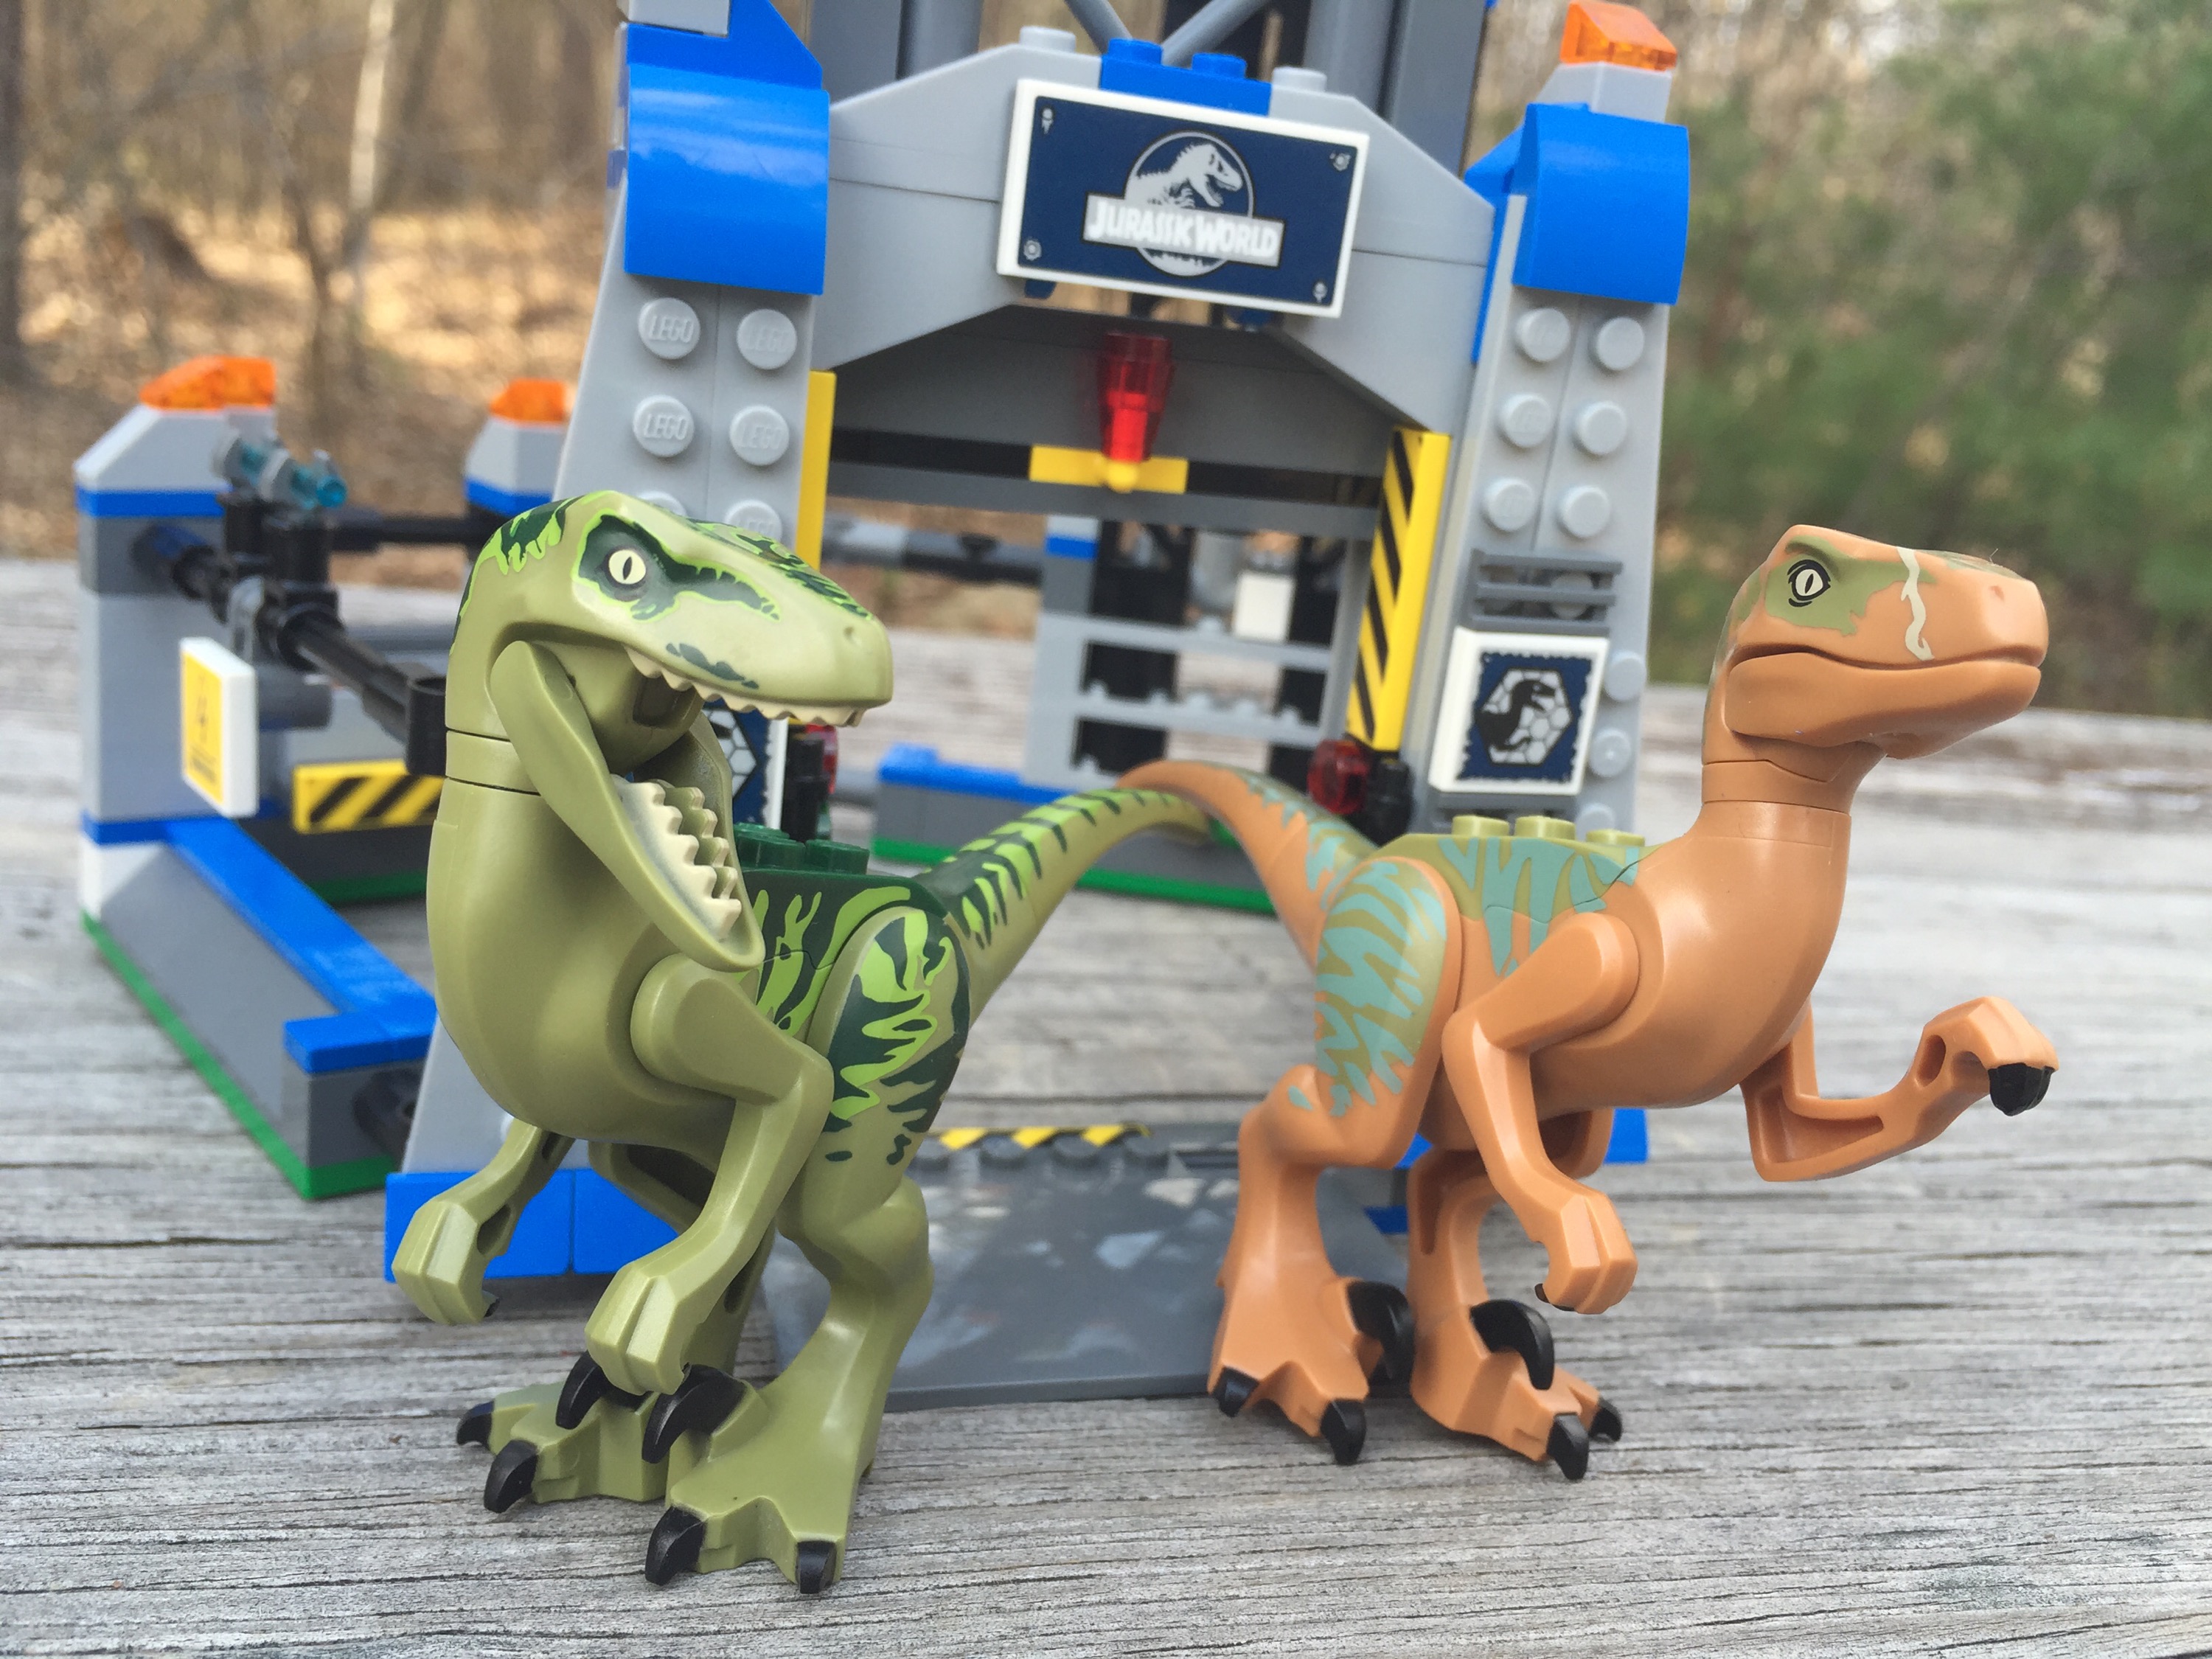 LEGO Jurassic Park Jurassic World Raptor Escape Set #75920